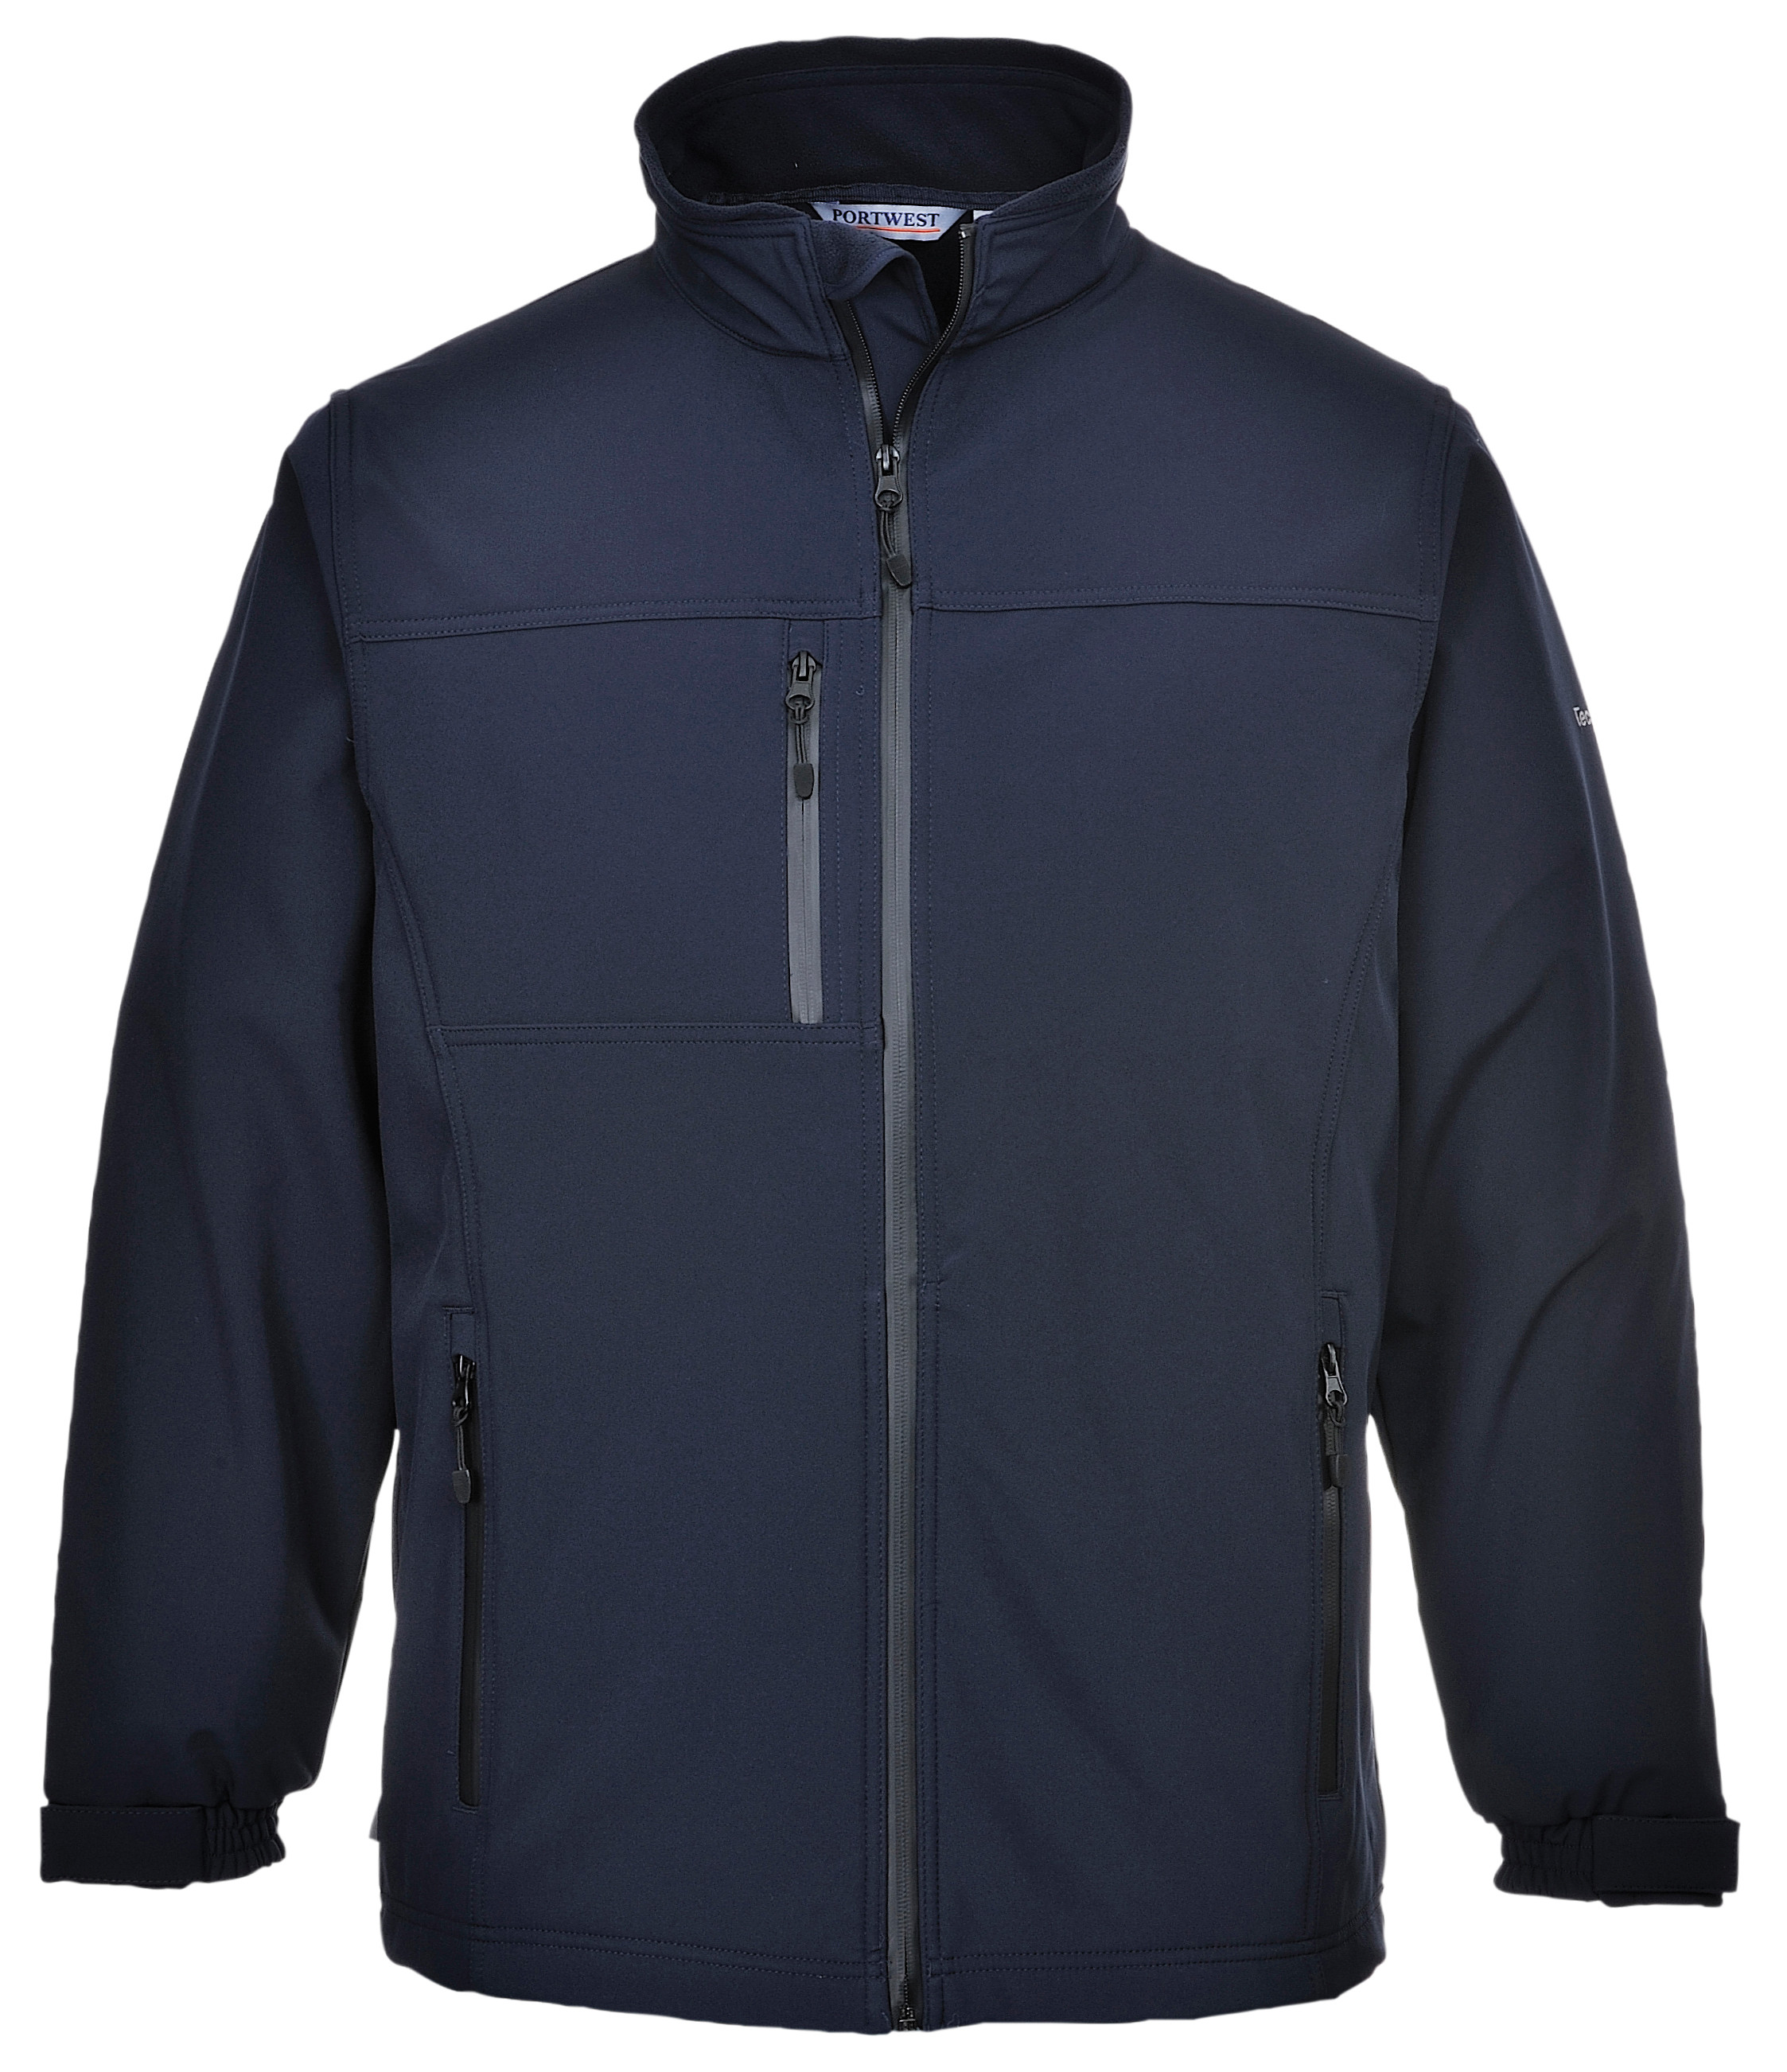 Technik Softshell Jacket - Navy - Jackets - Workwear - PPE & Workwear